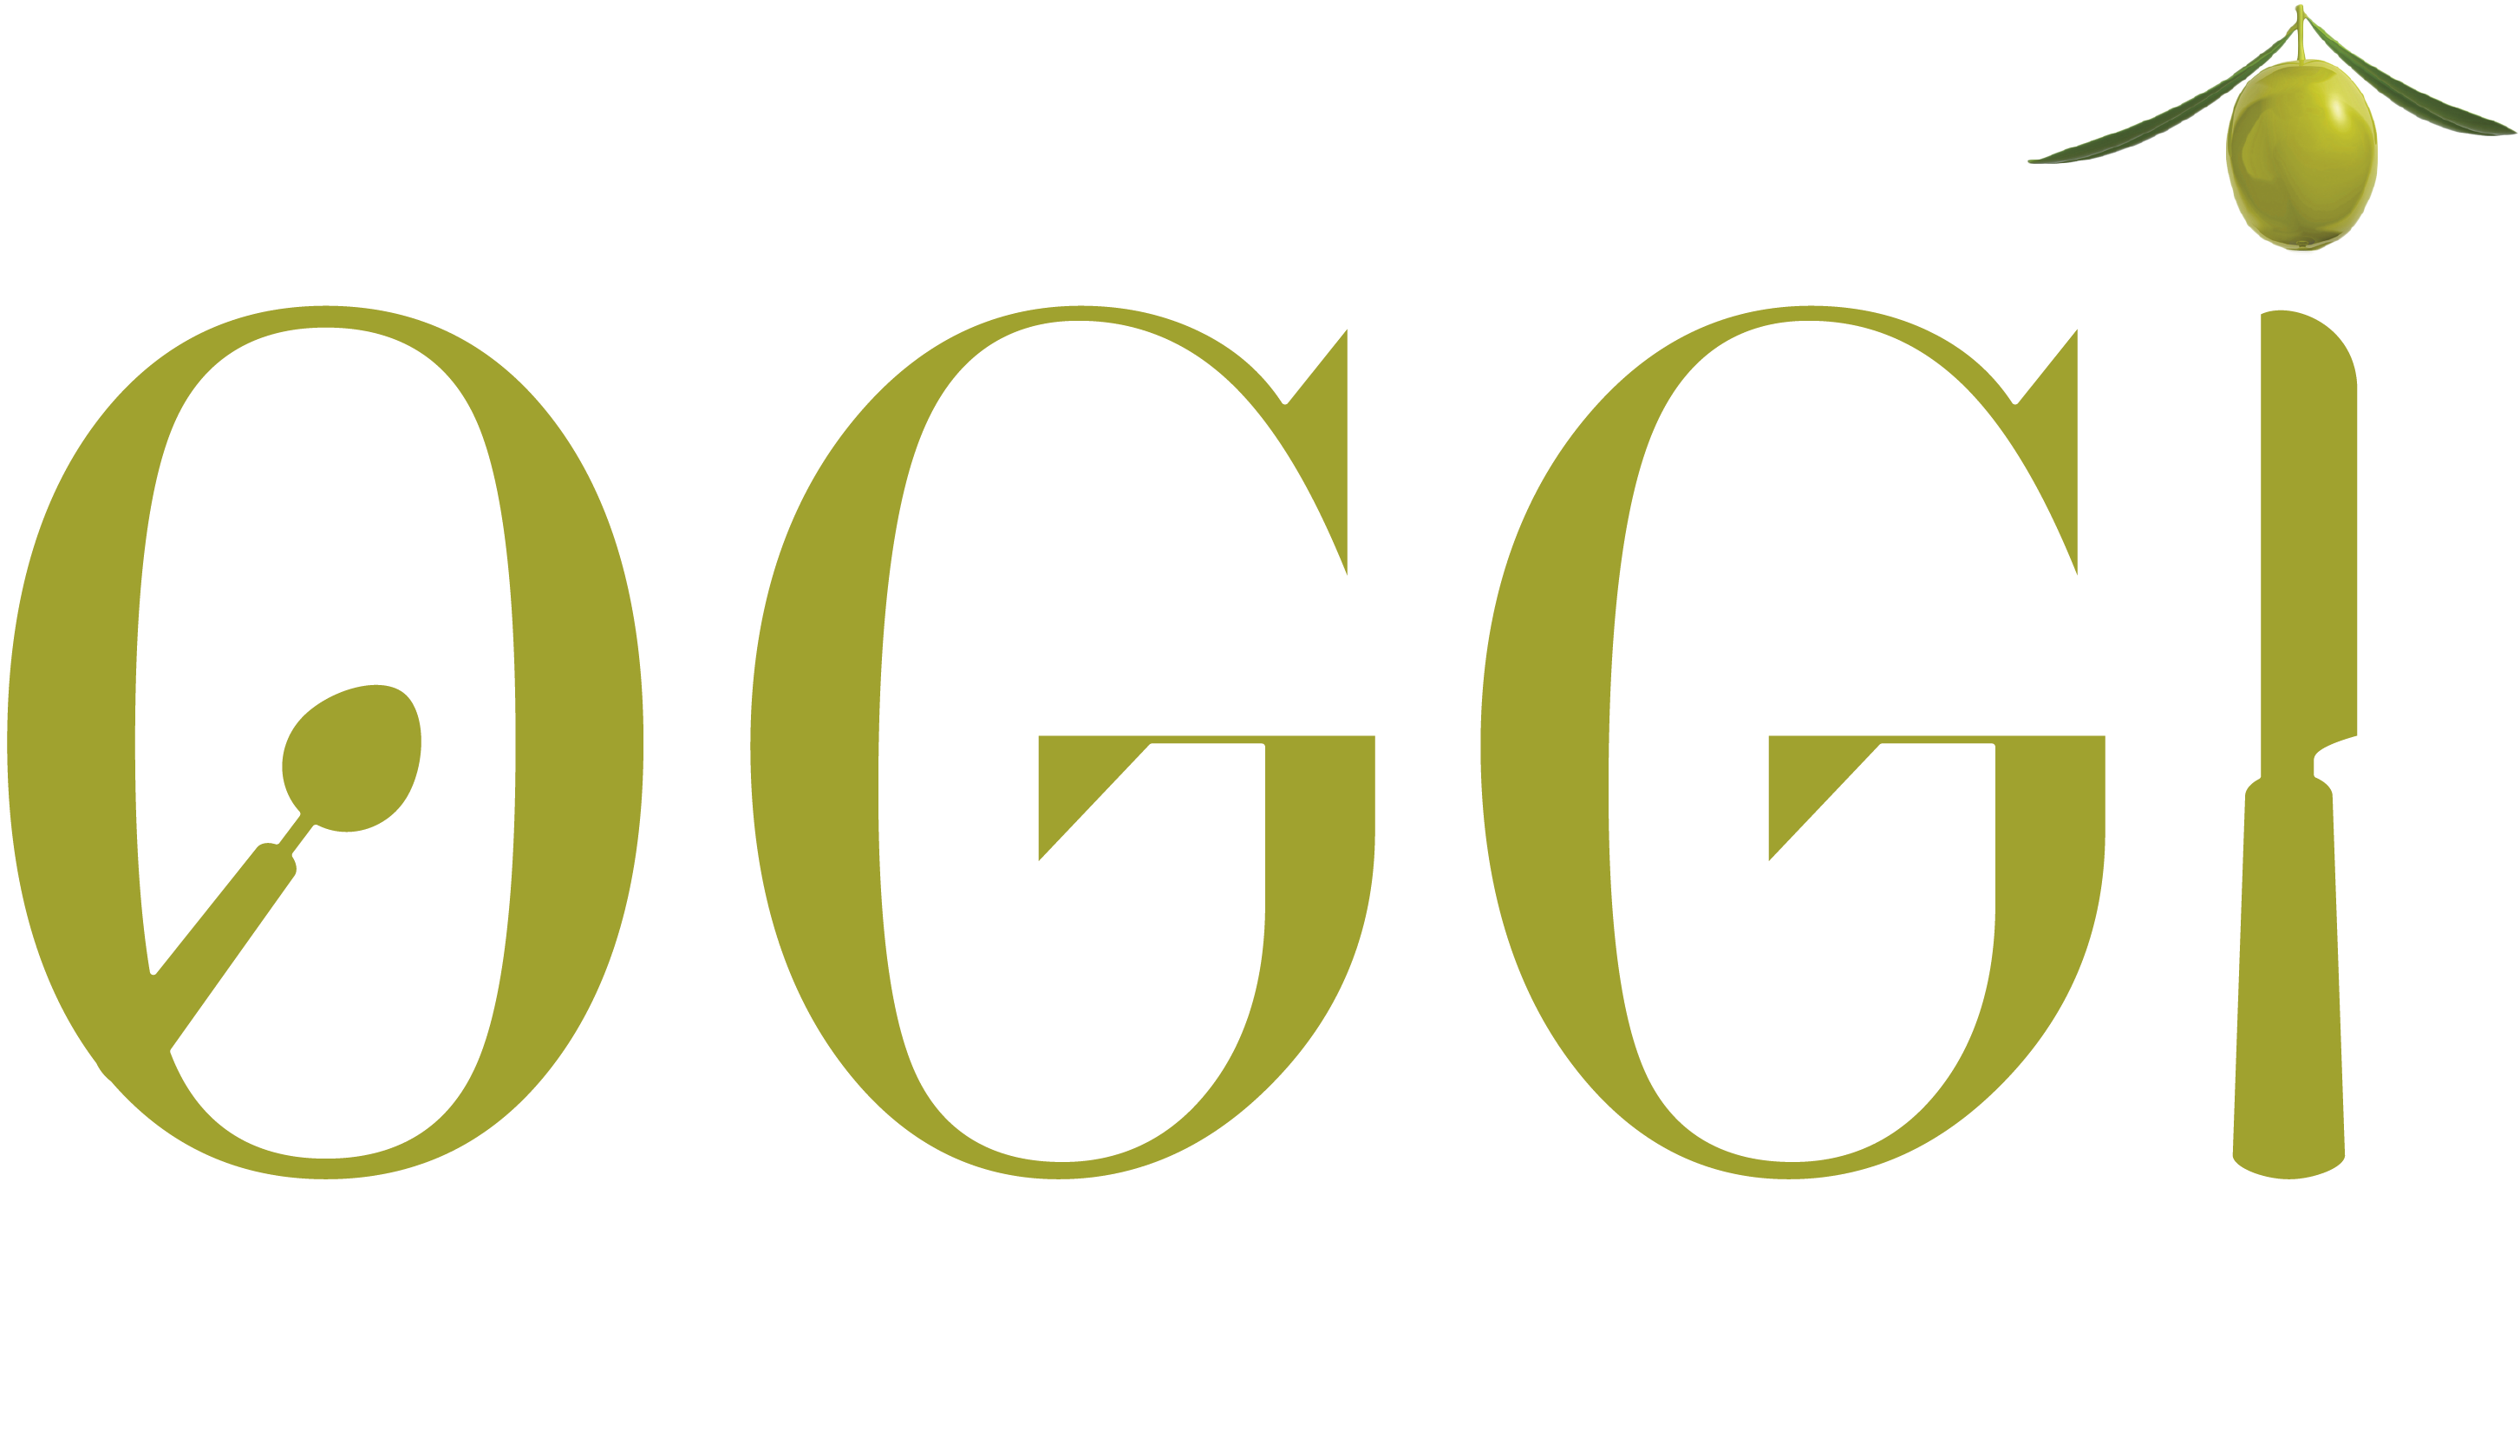 OGGI, Simply Italian